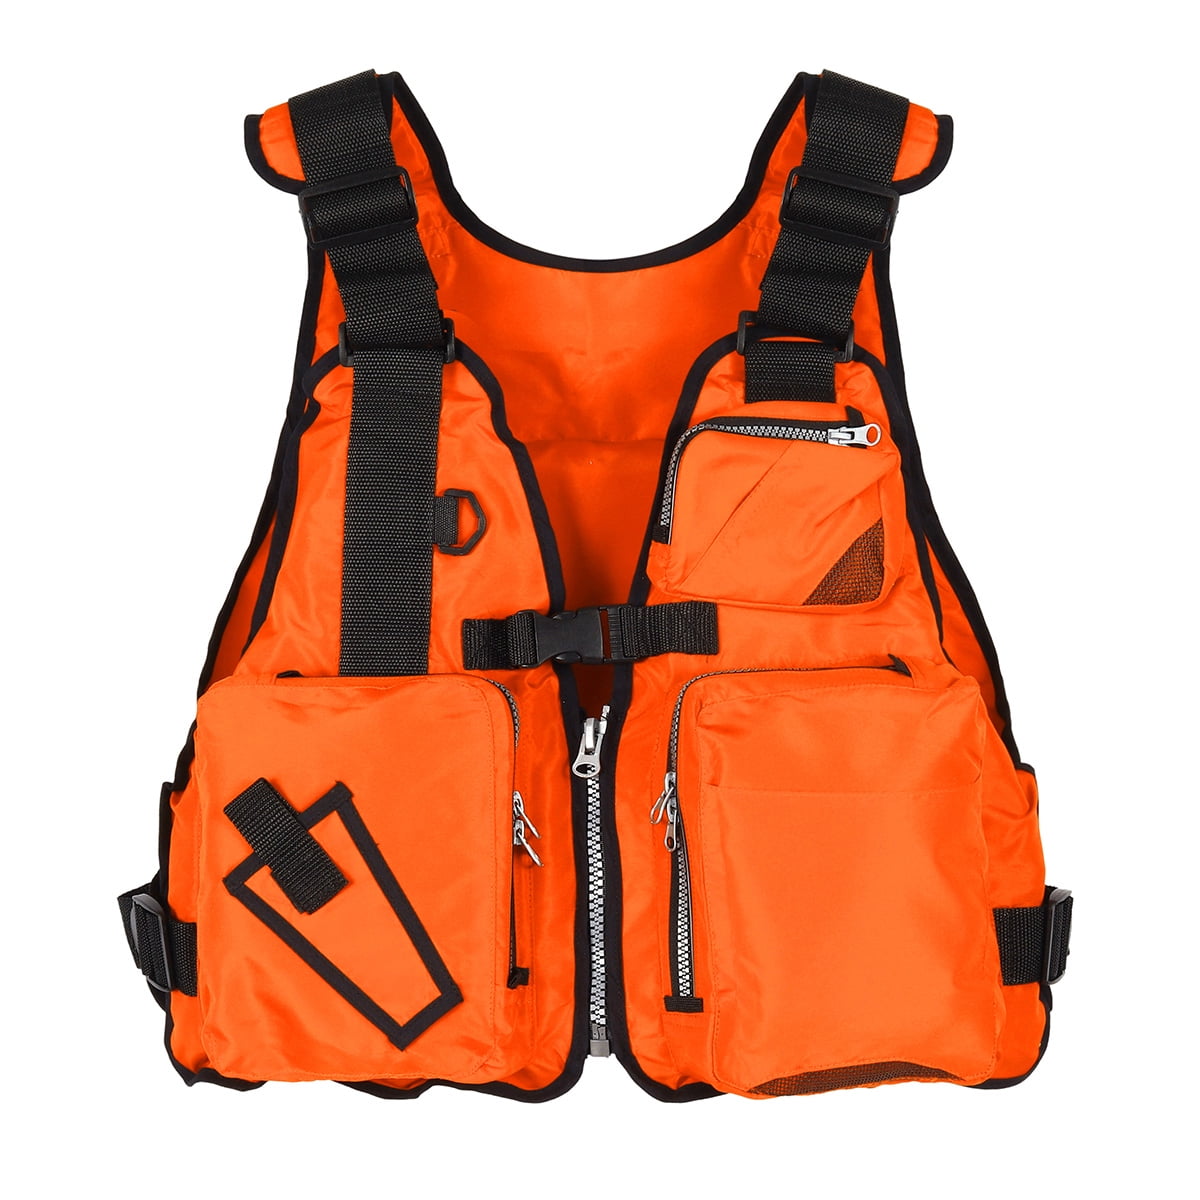 Adult Adjustable Reflective Sailing Kayak Fly Fishing Premium Vest Life Jacket 